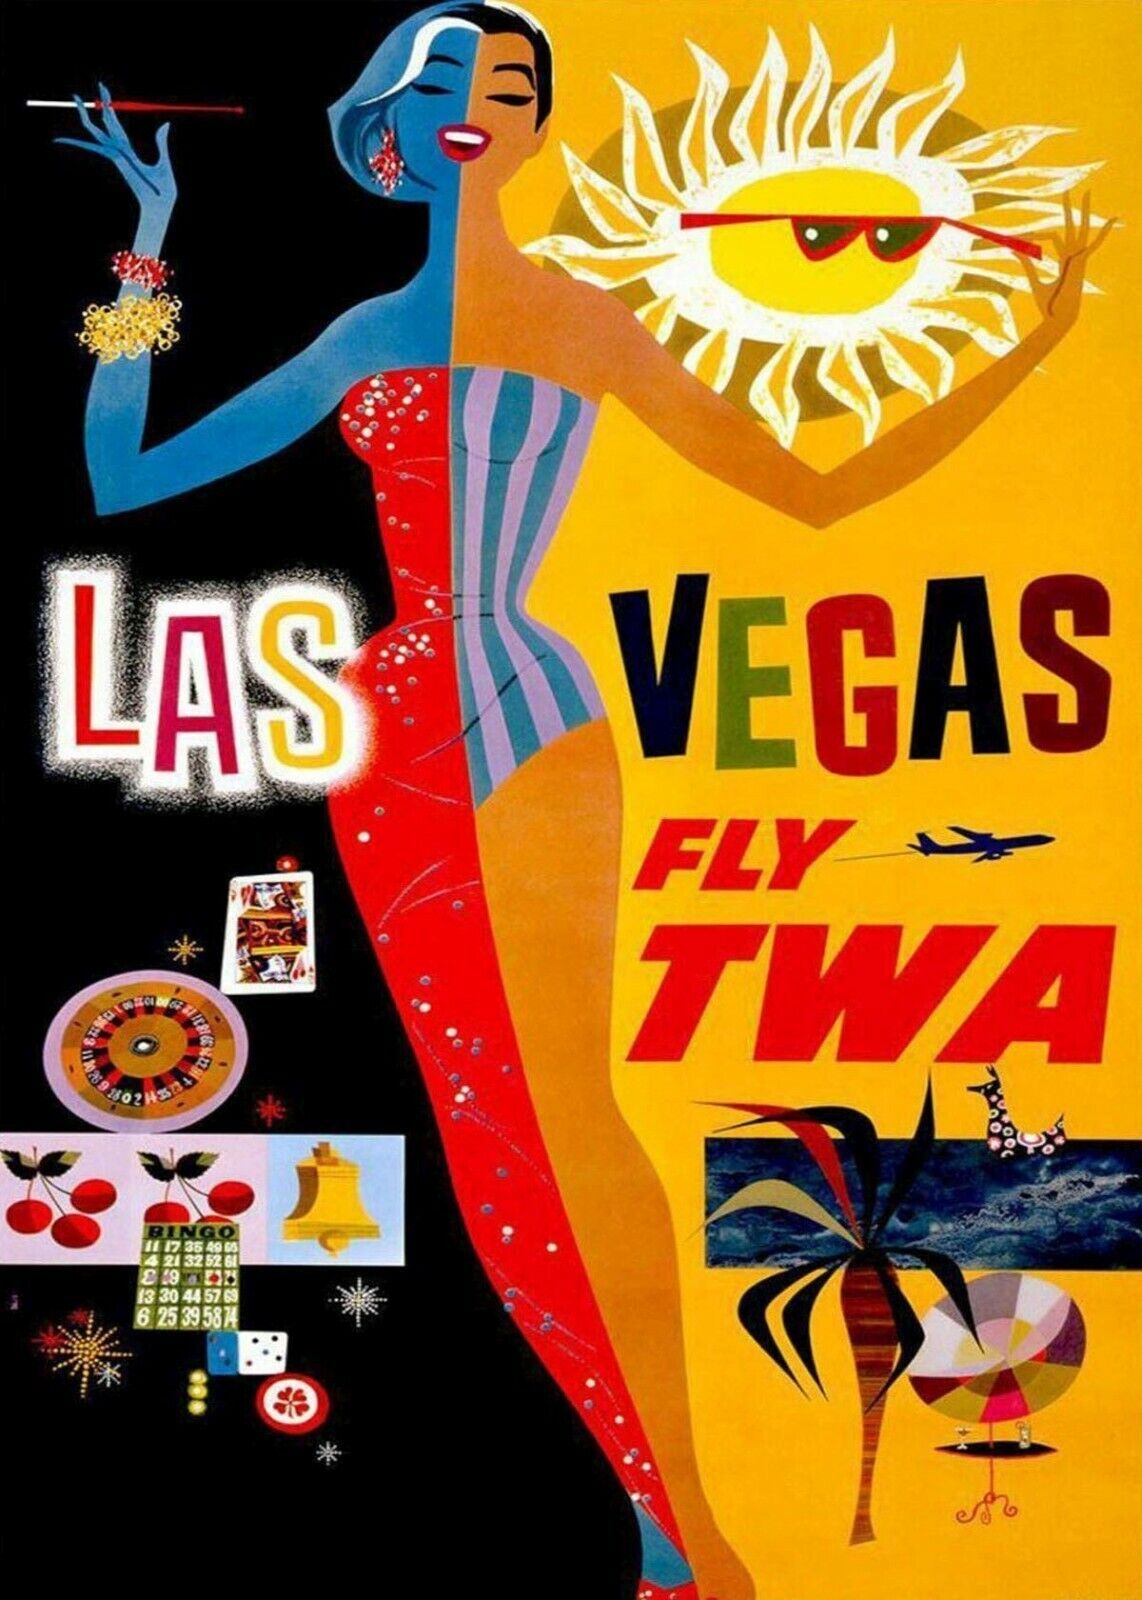 1965 Las Vegas Travel Poster PHOTO Retro Visit Las Vegas Fly TWA 5x7